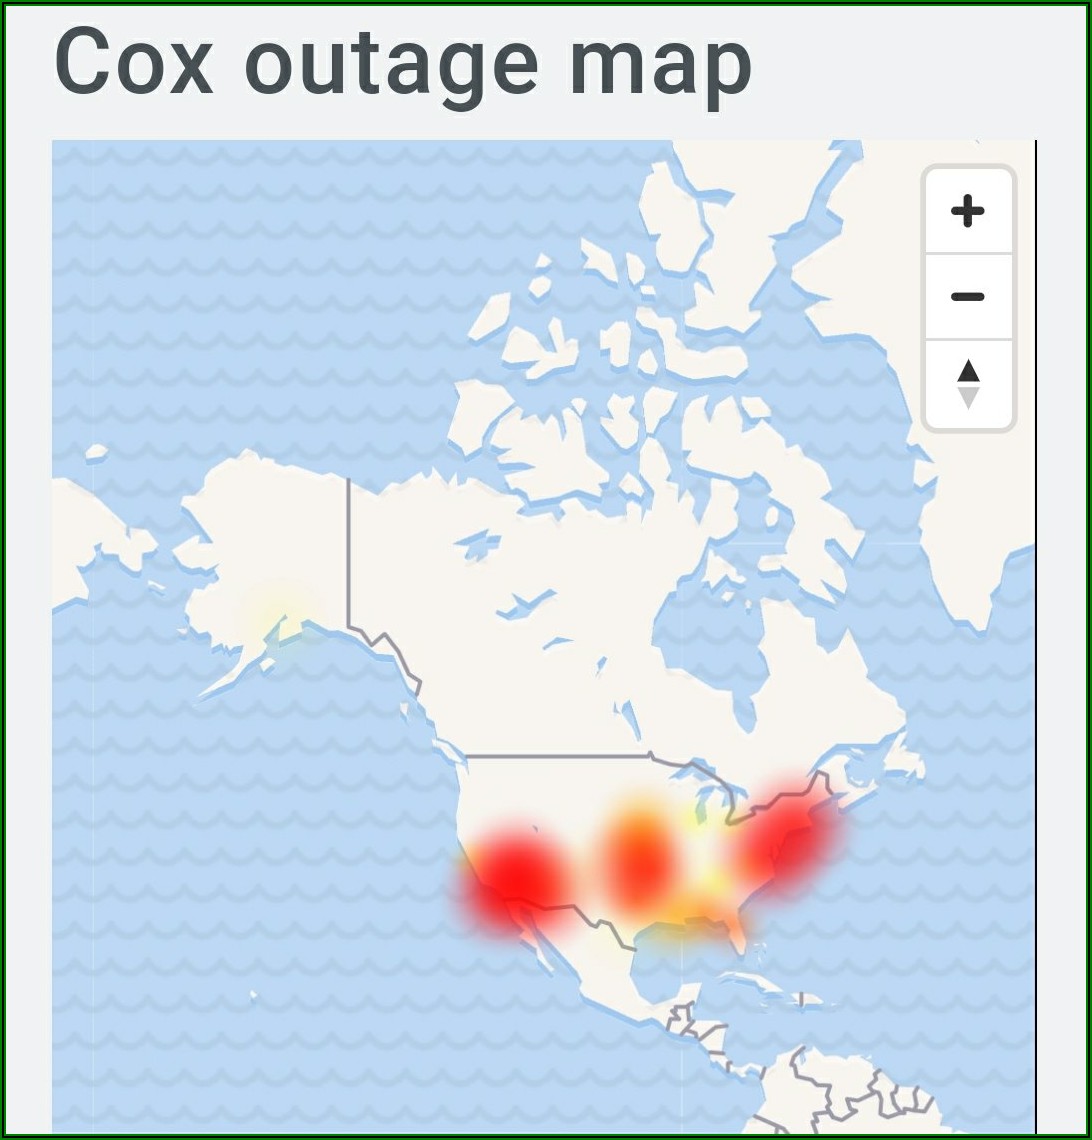 Cox Internet Outage Map Kansas